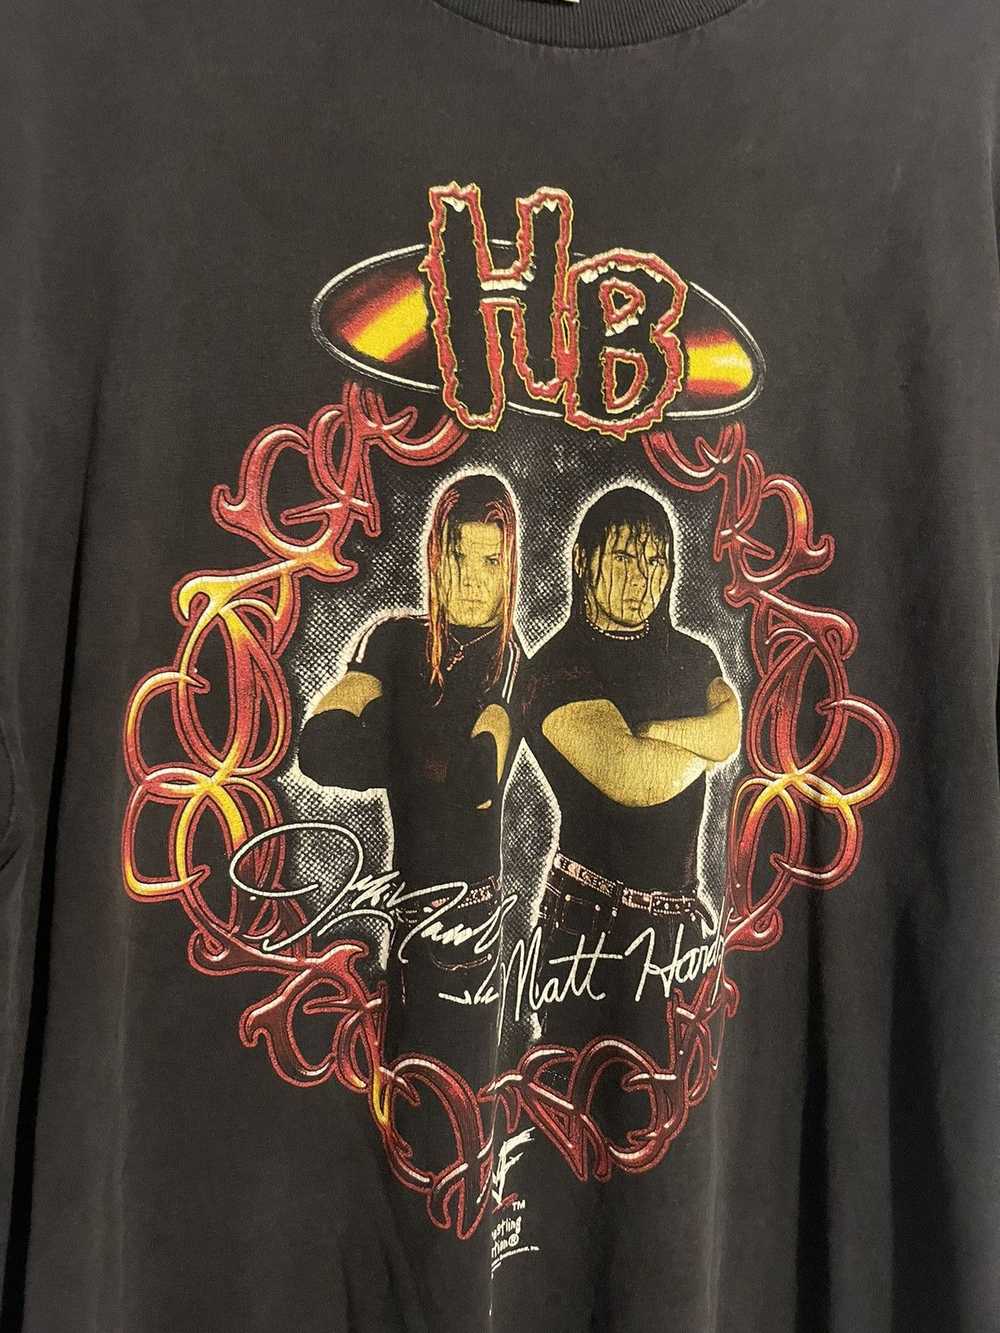 Vintage × Wwe × Wwf 2000 WWF Hardy Boyz Shirt - image 7